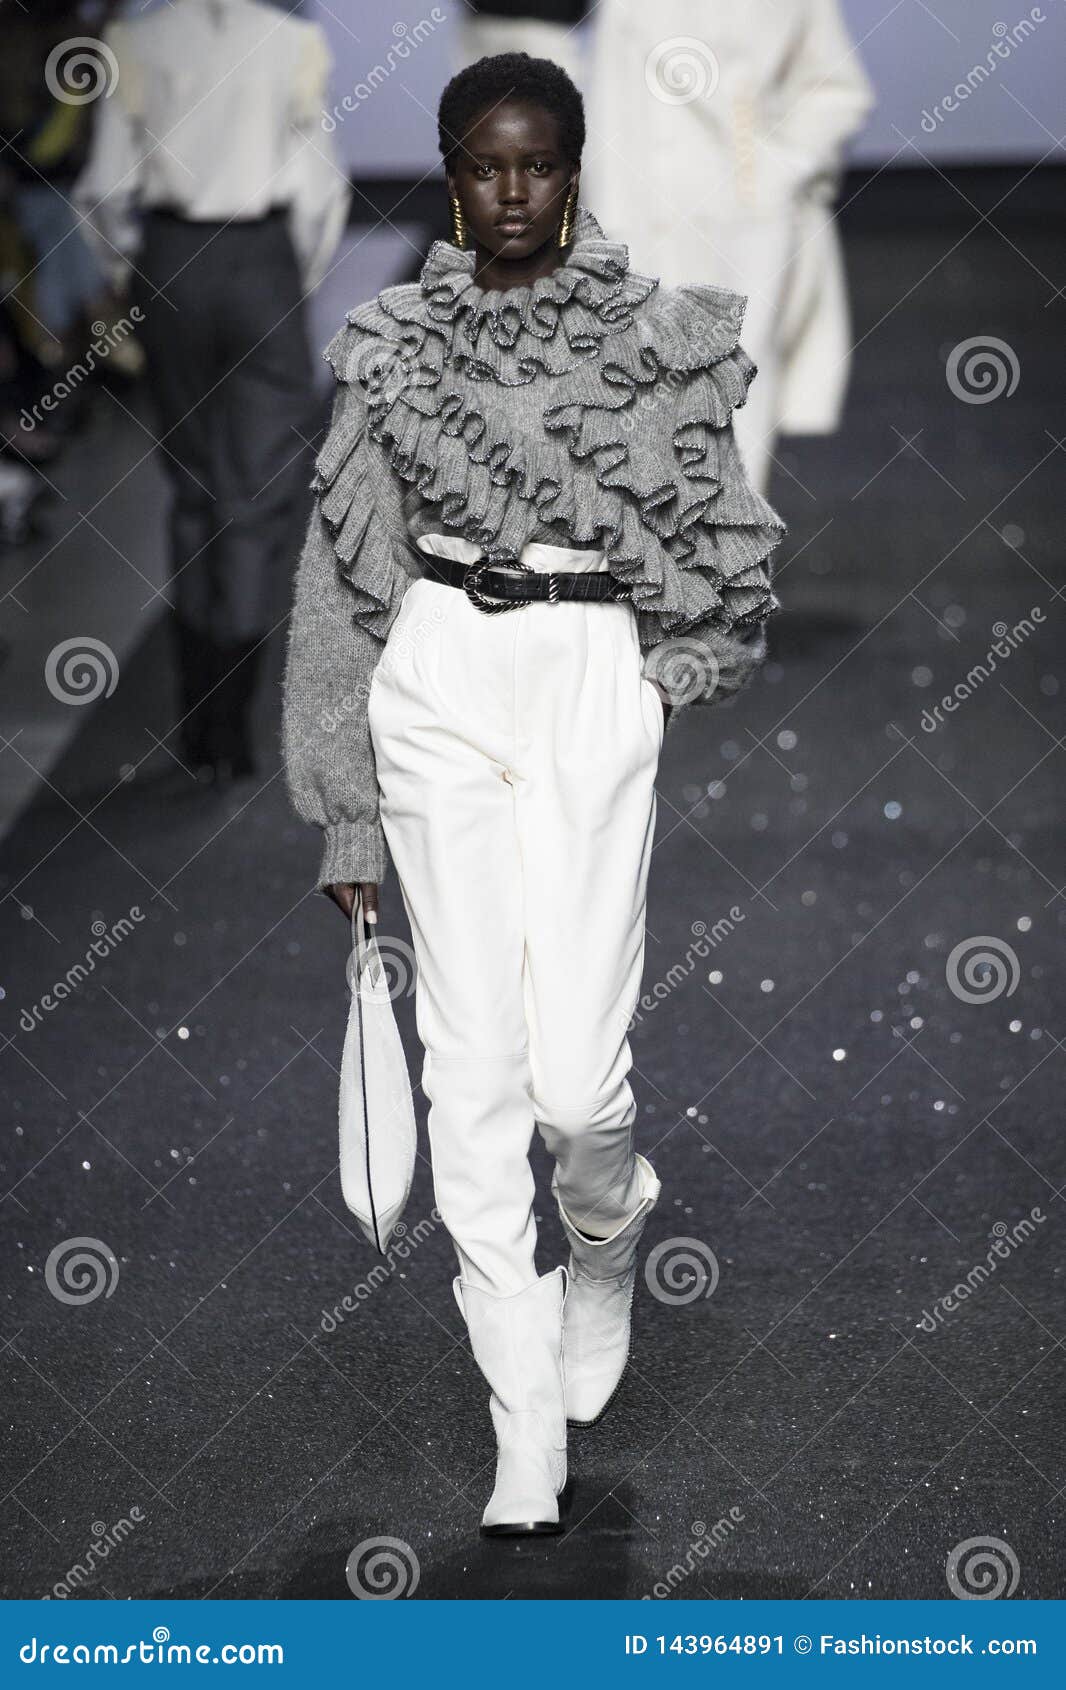 Model Walks the Runway at the Alberta Ferretti Show at Milan Fashion Week 2019/20 Editorial Photo - Image of fall, 2020: 143964891